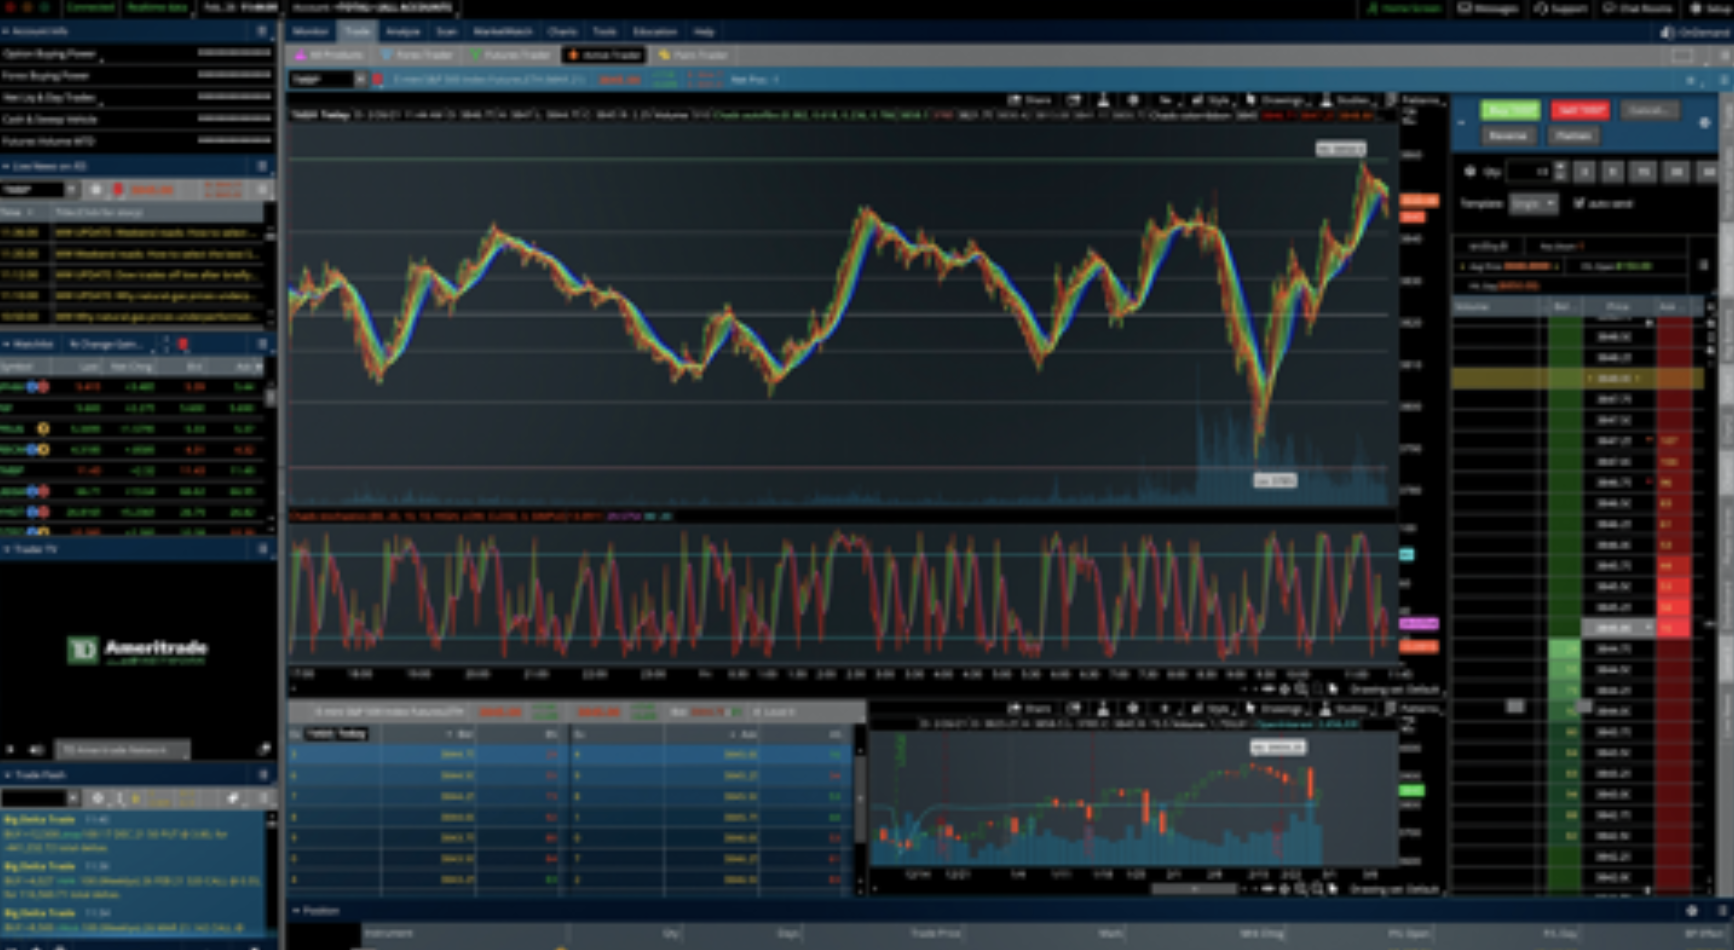 Futures Trading Software Platform, Venom Trading